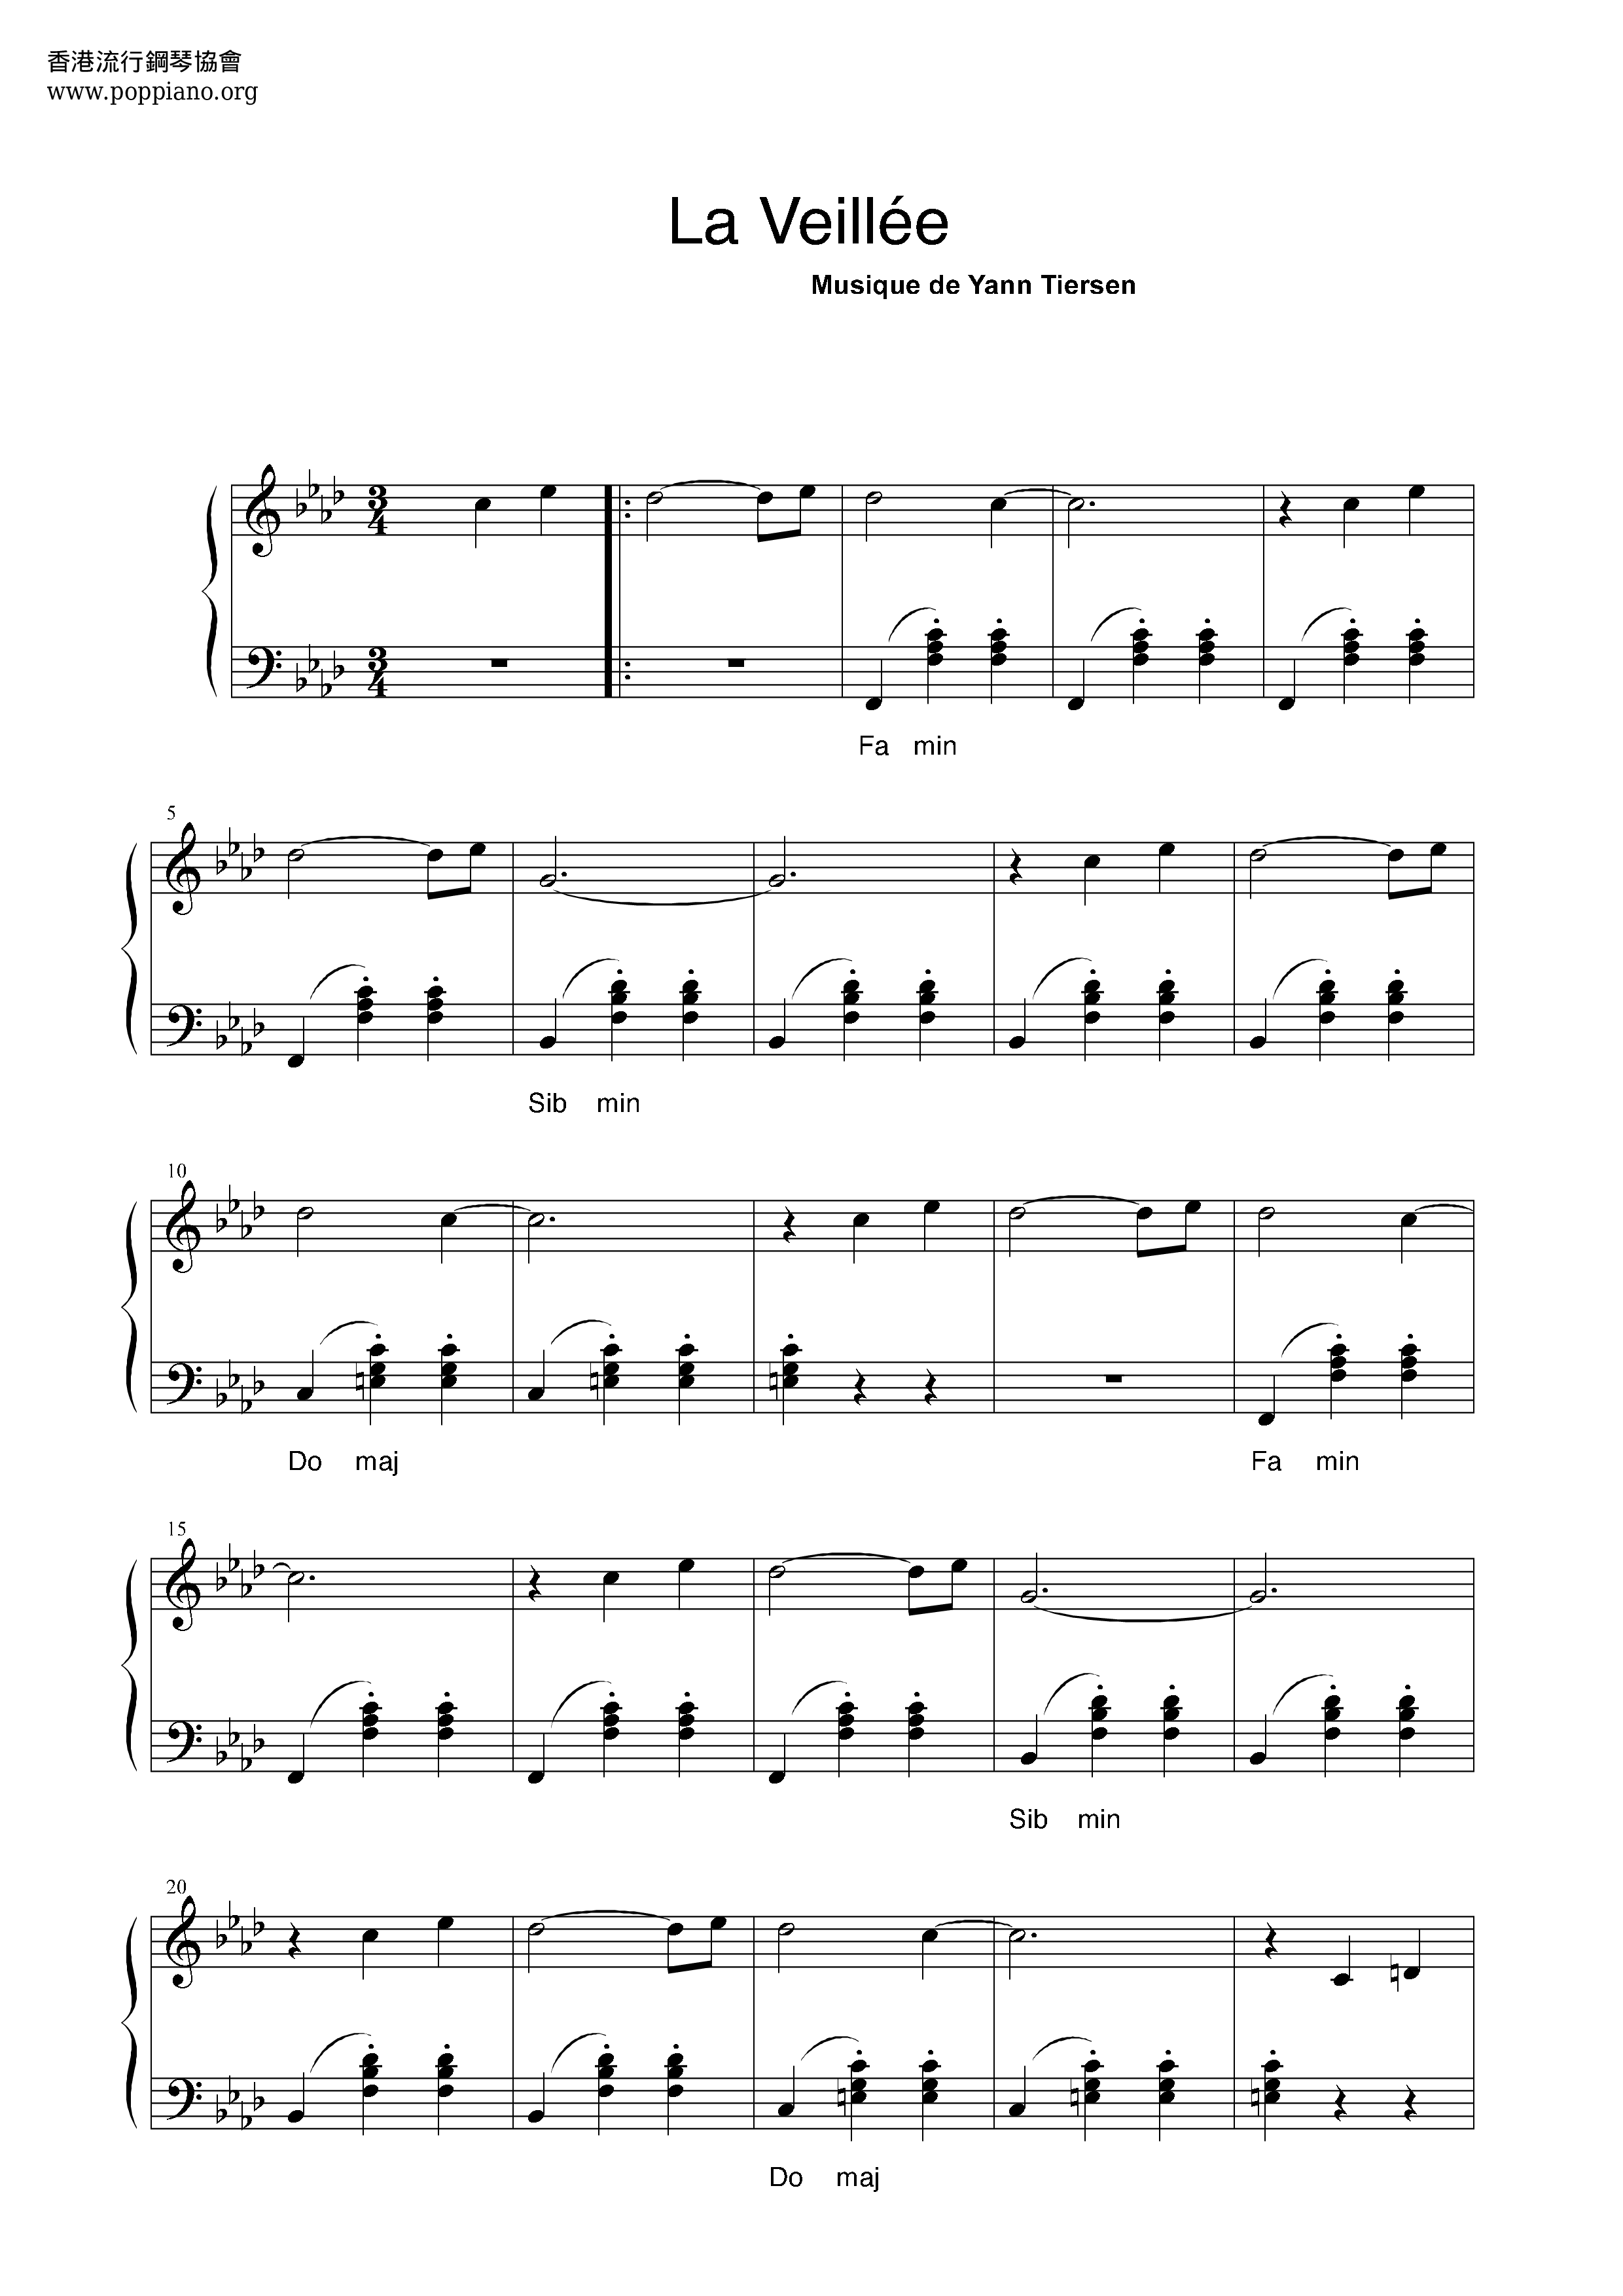 La Veilleeピアノ譜